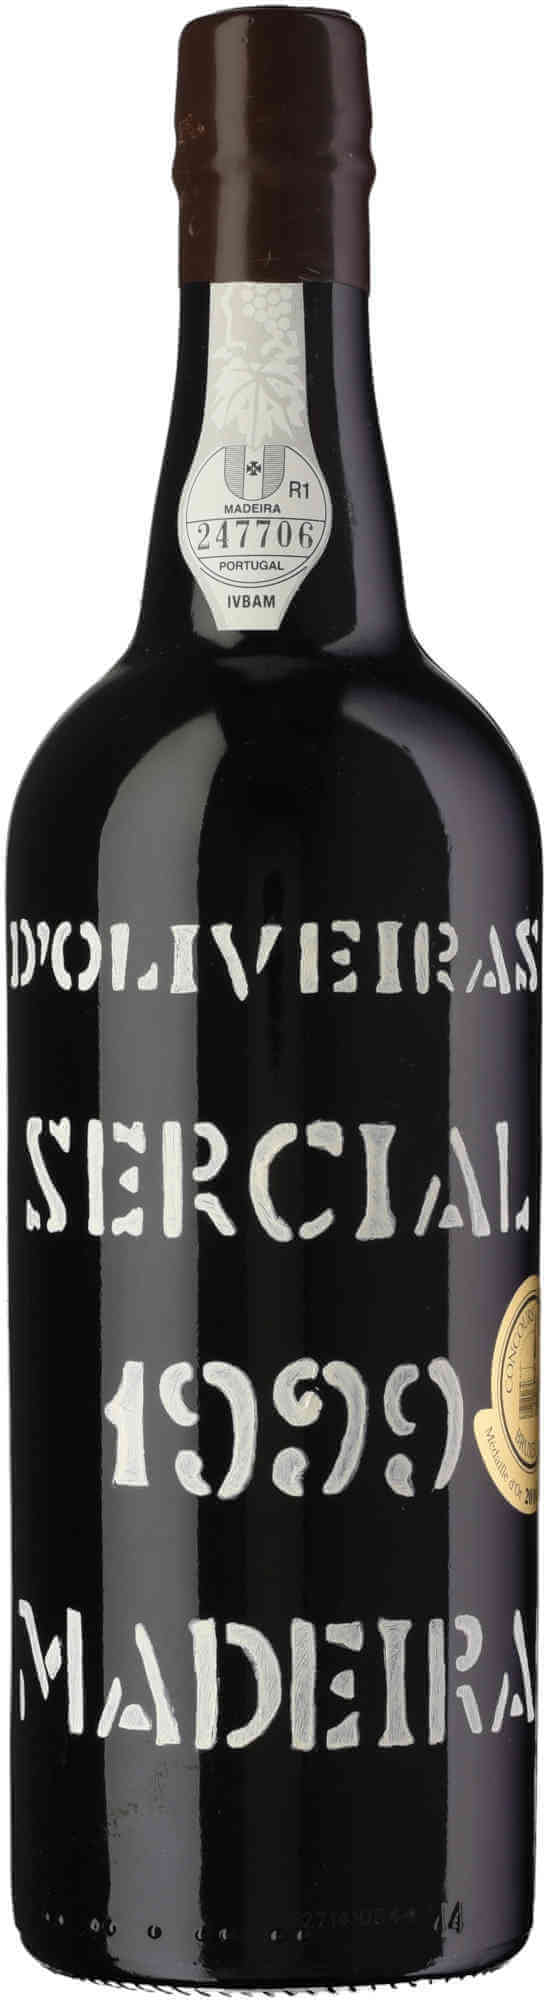 D-Oliveira-Sercial-1999